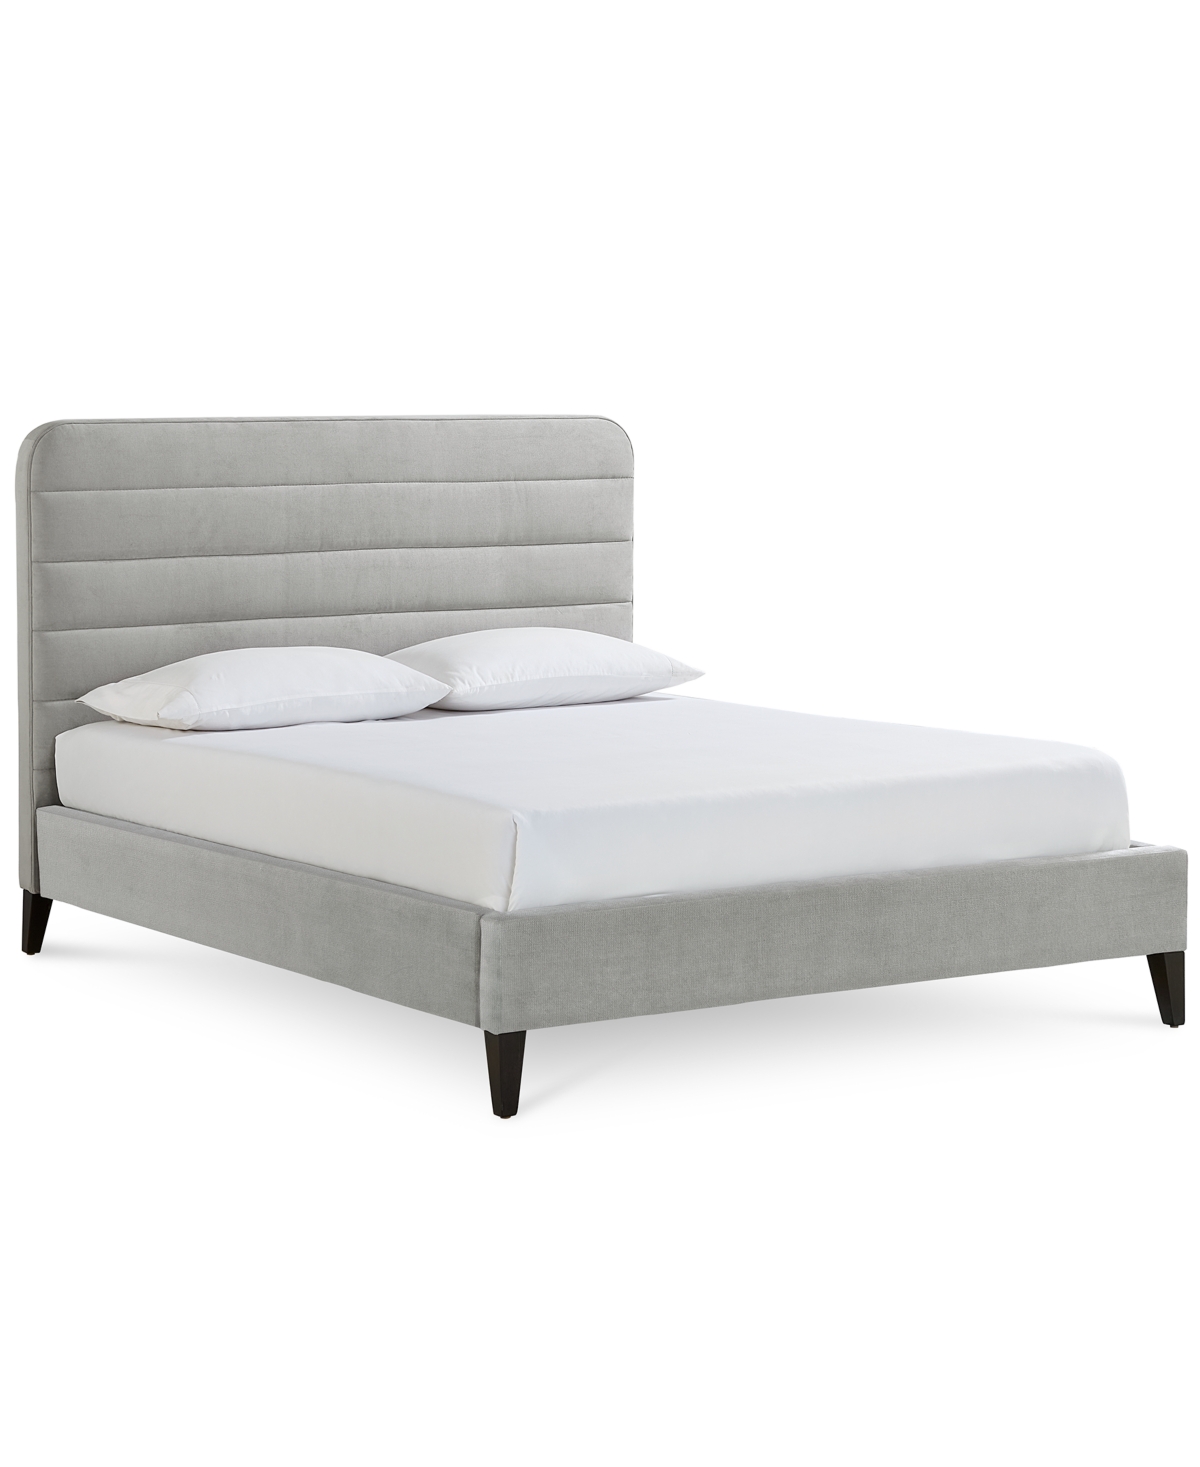 Furniture Haryan Upholstered California King Bed In Platinum